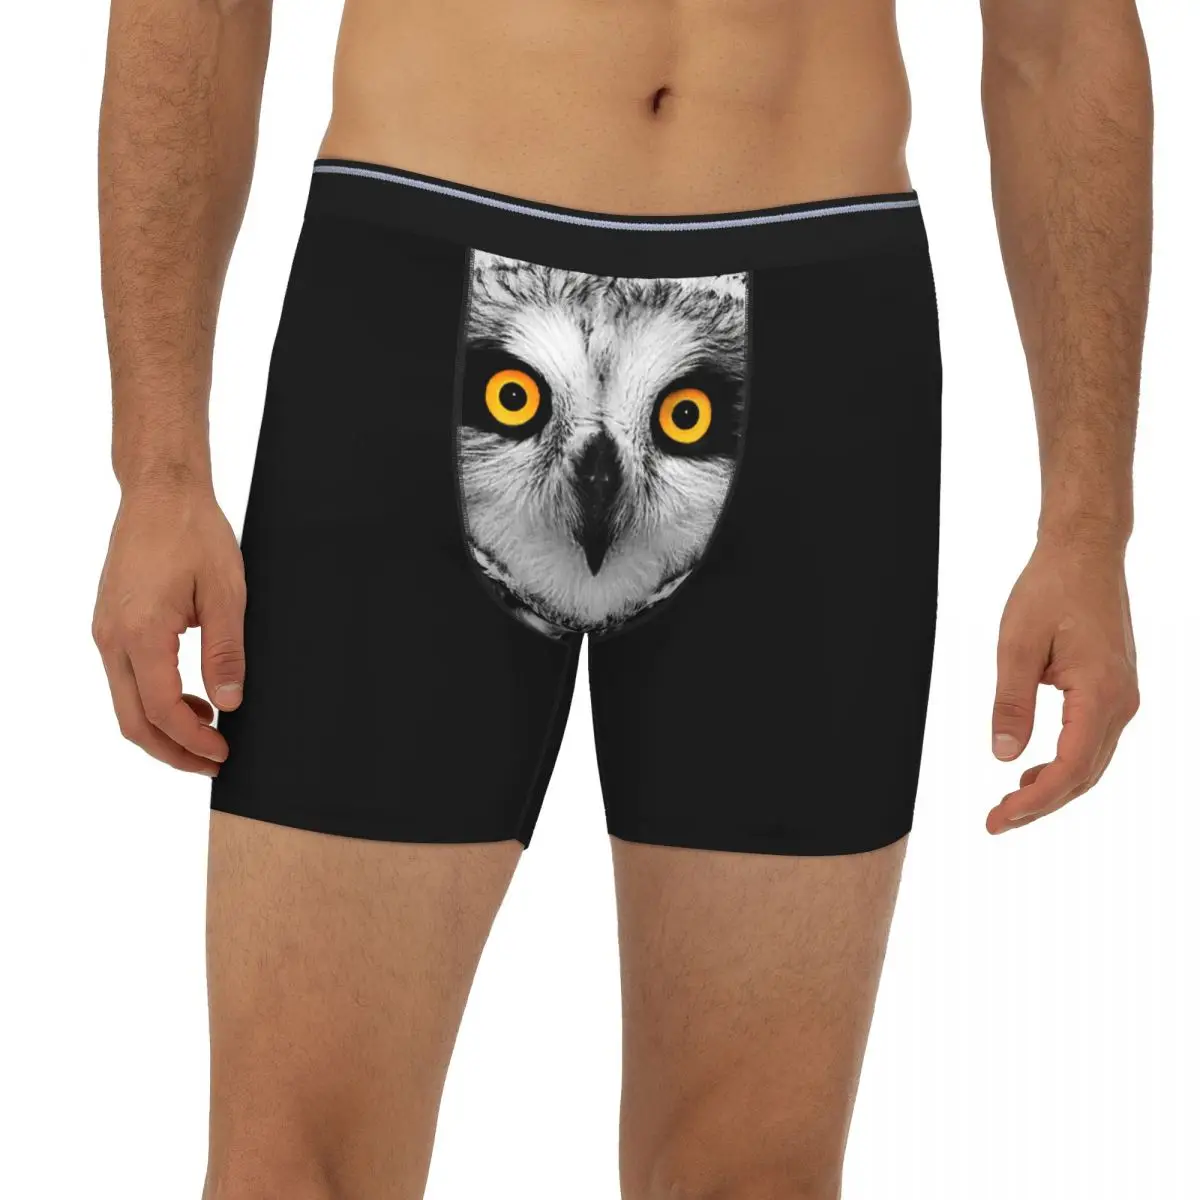 

Eagle Underpants Breathbale Panties spoof funny Male Underwear Boxer Briefs extended underwear